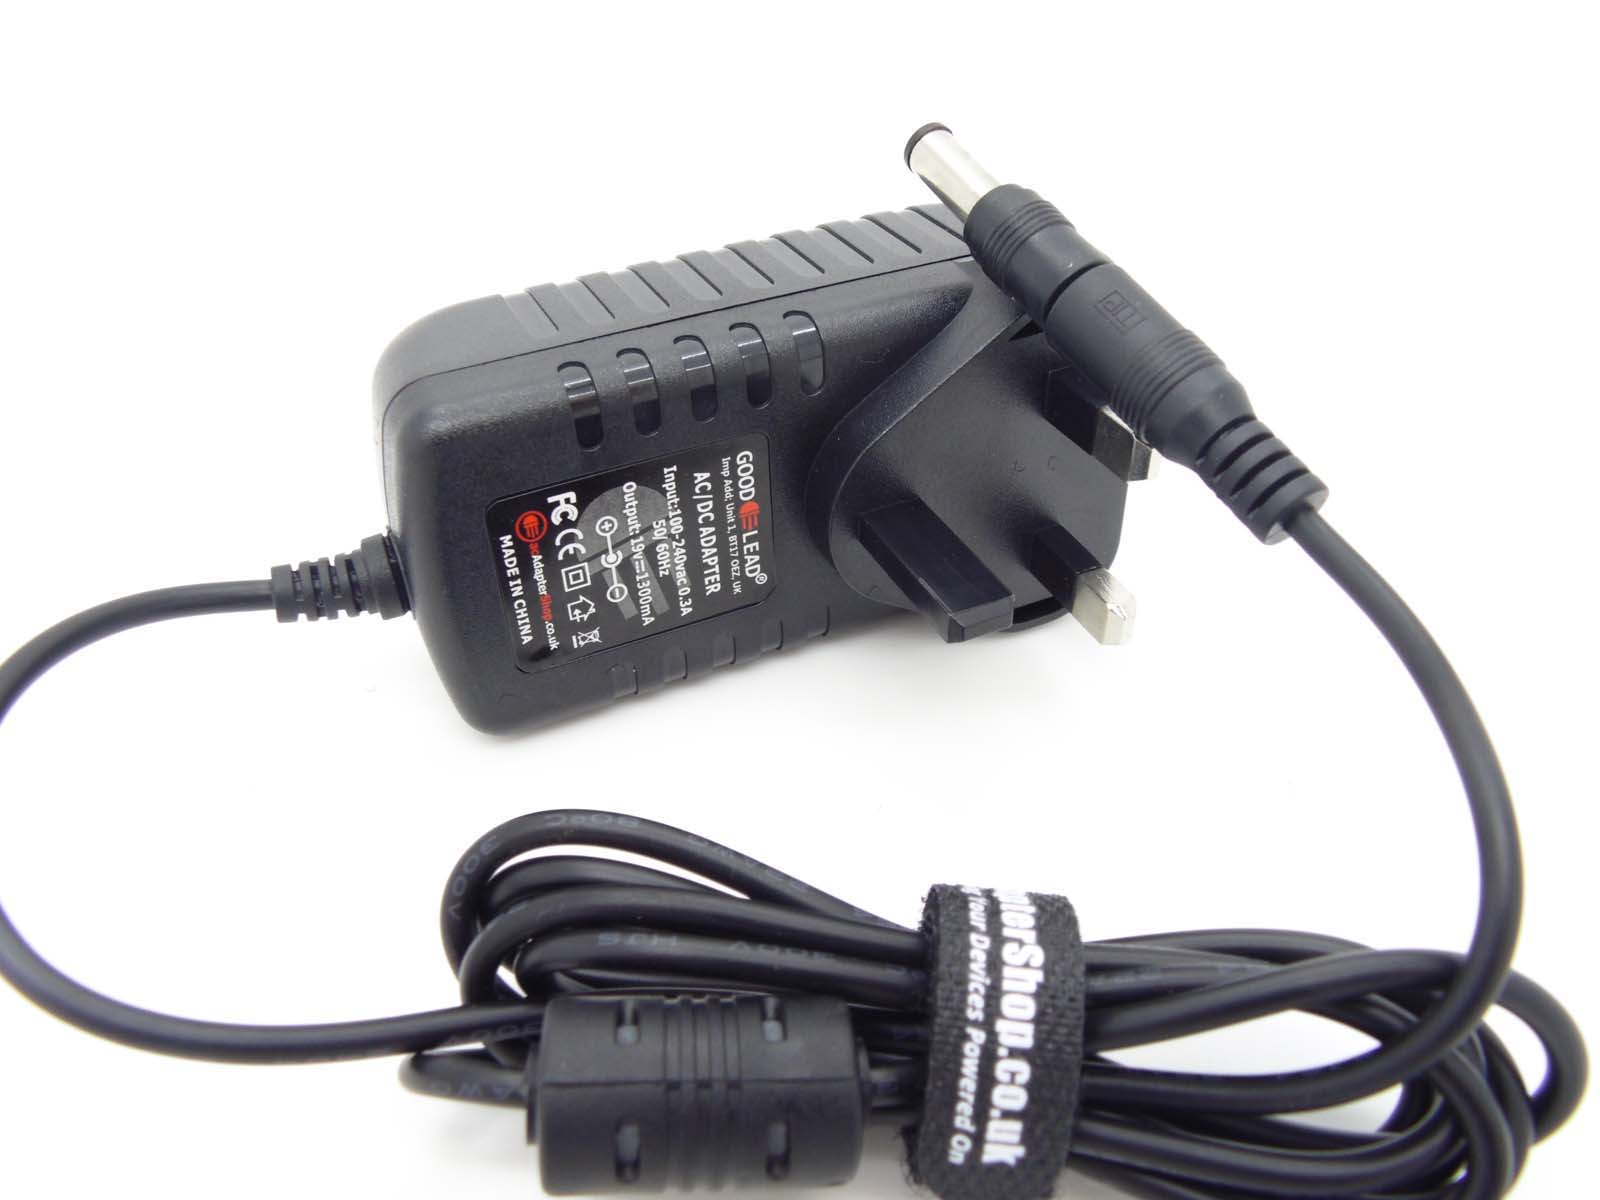 19V 1.3 LG Switching Adapter Power Supply for LG 24M37H LED Monitor eBay